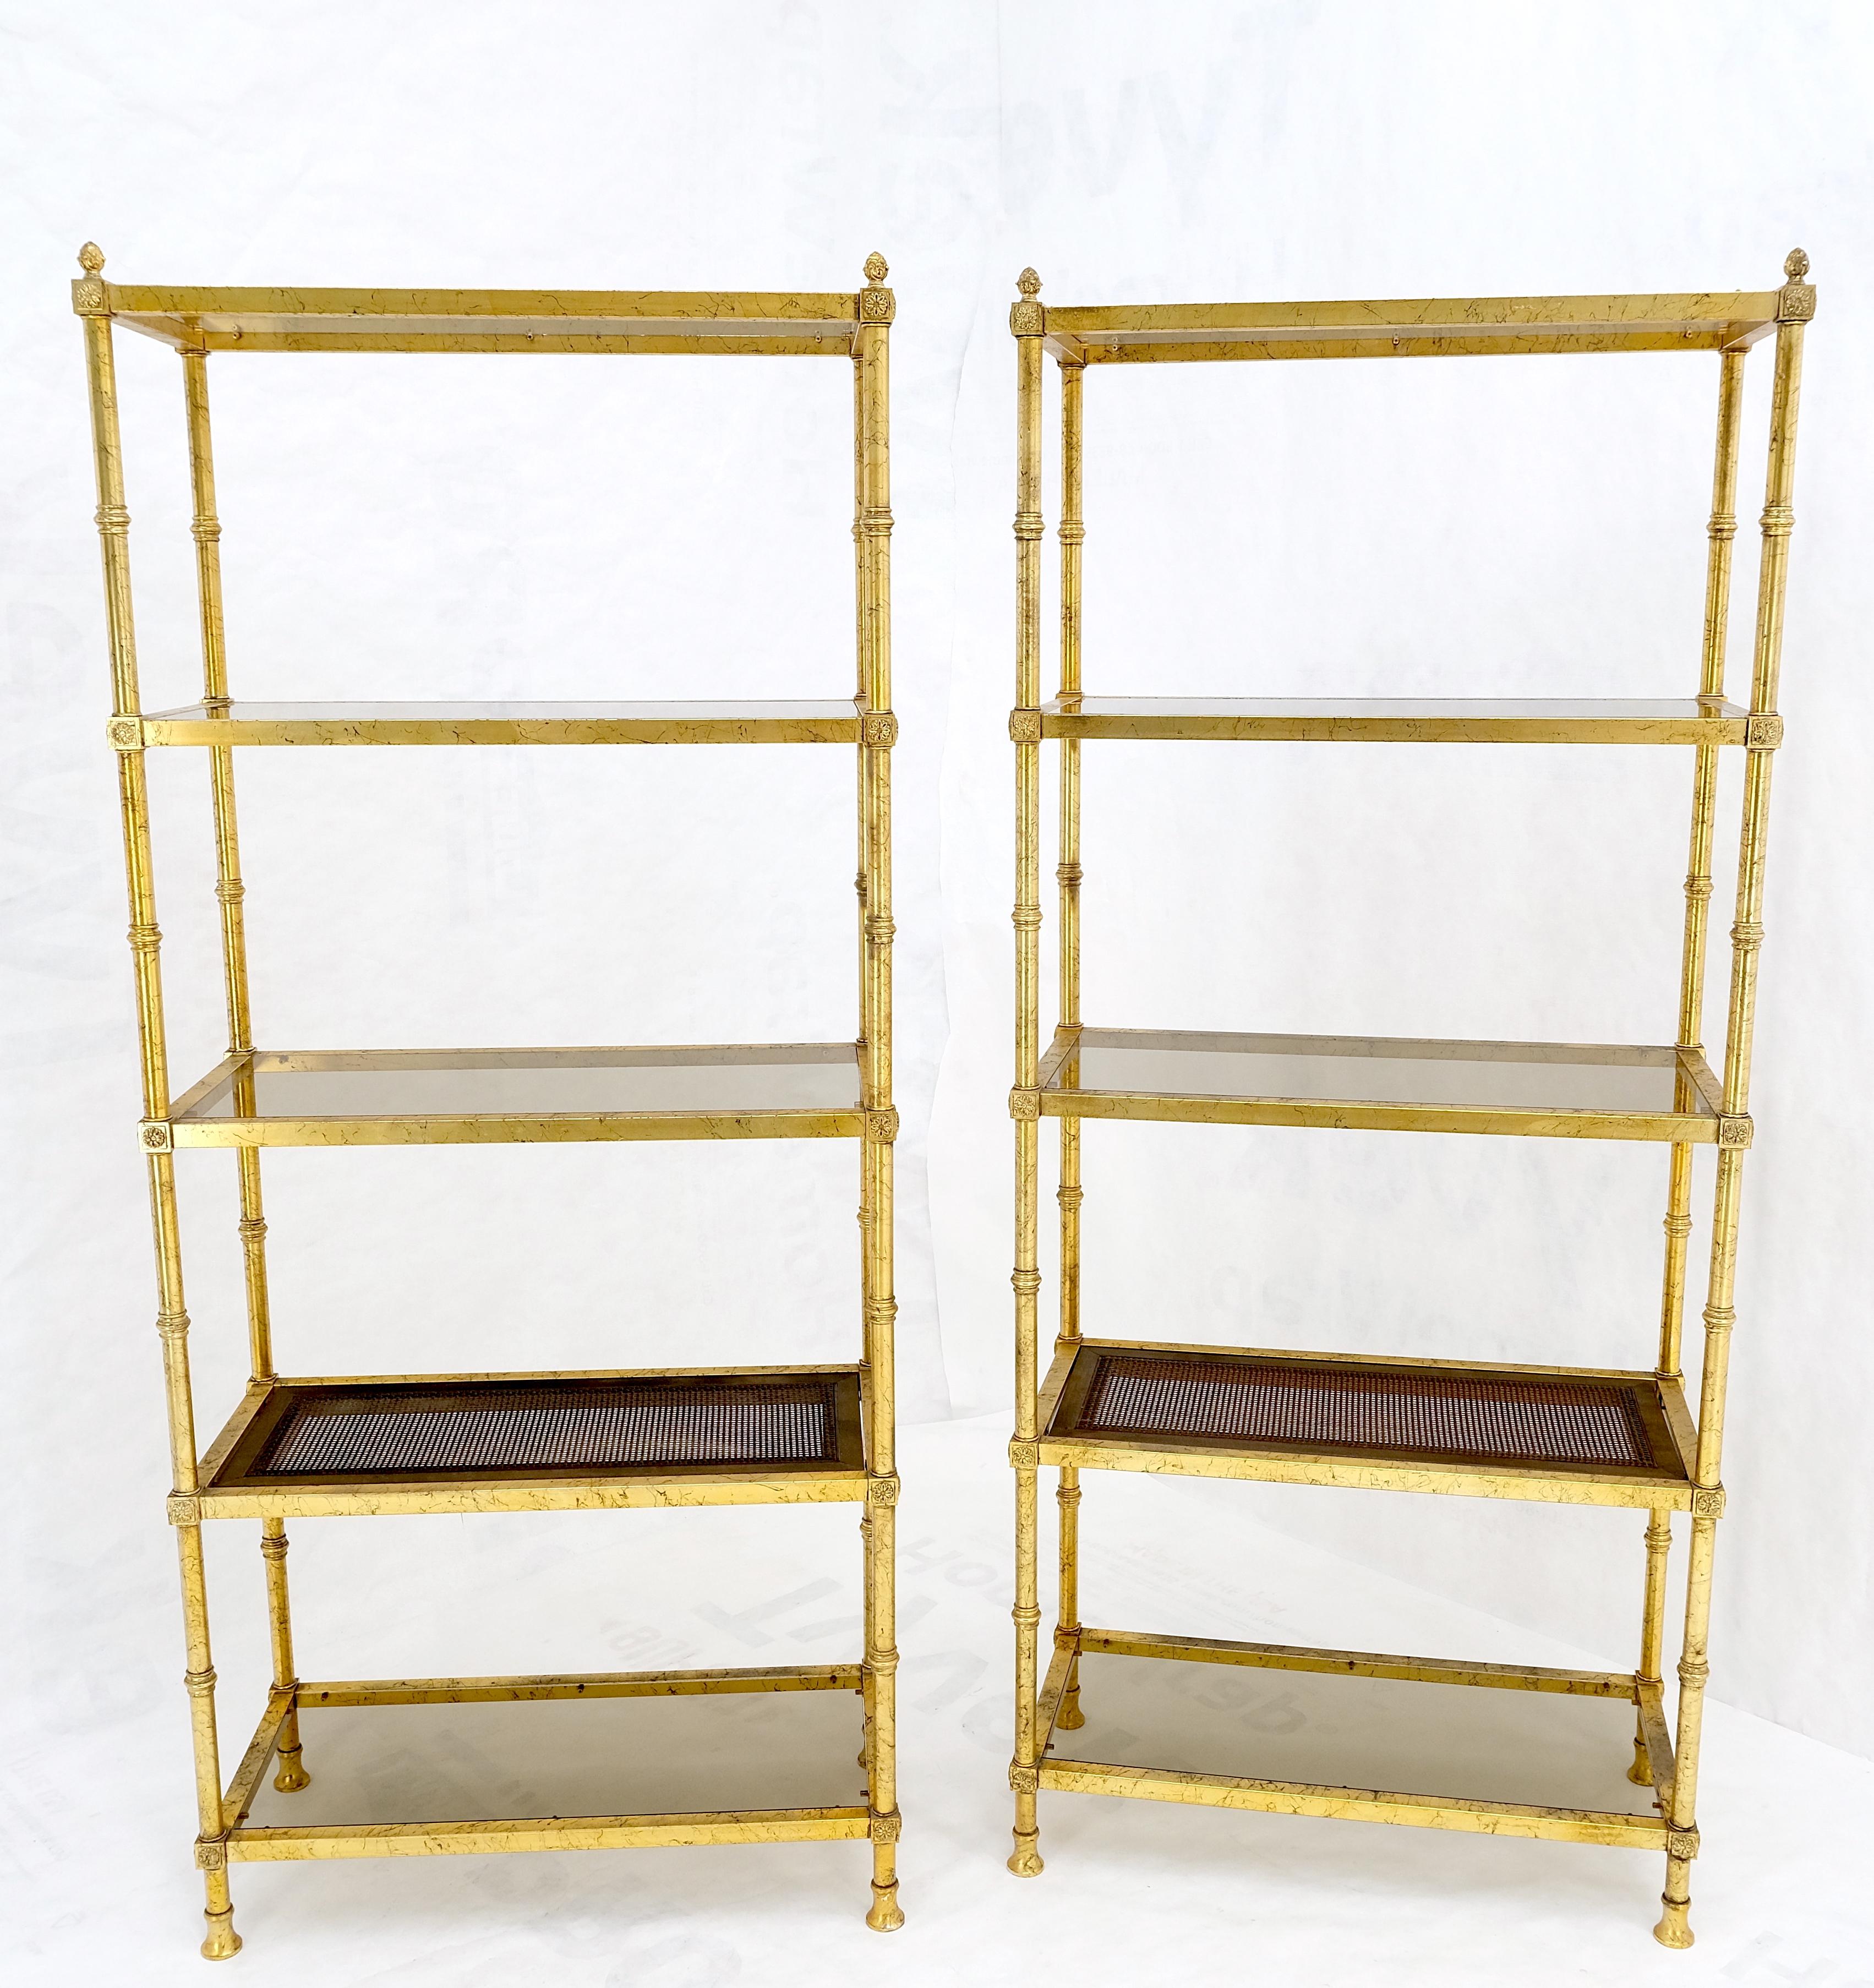 Pair of Gold Finish Cane & Glass Shelf Decorative Etageres Display Wall Units 2